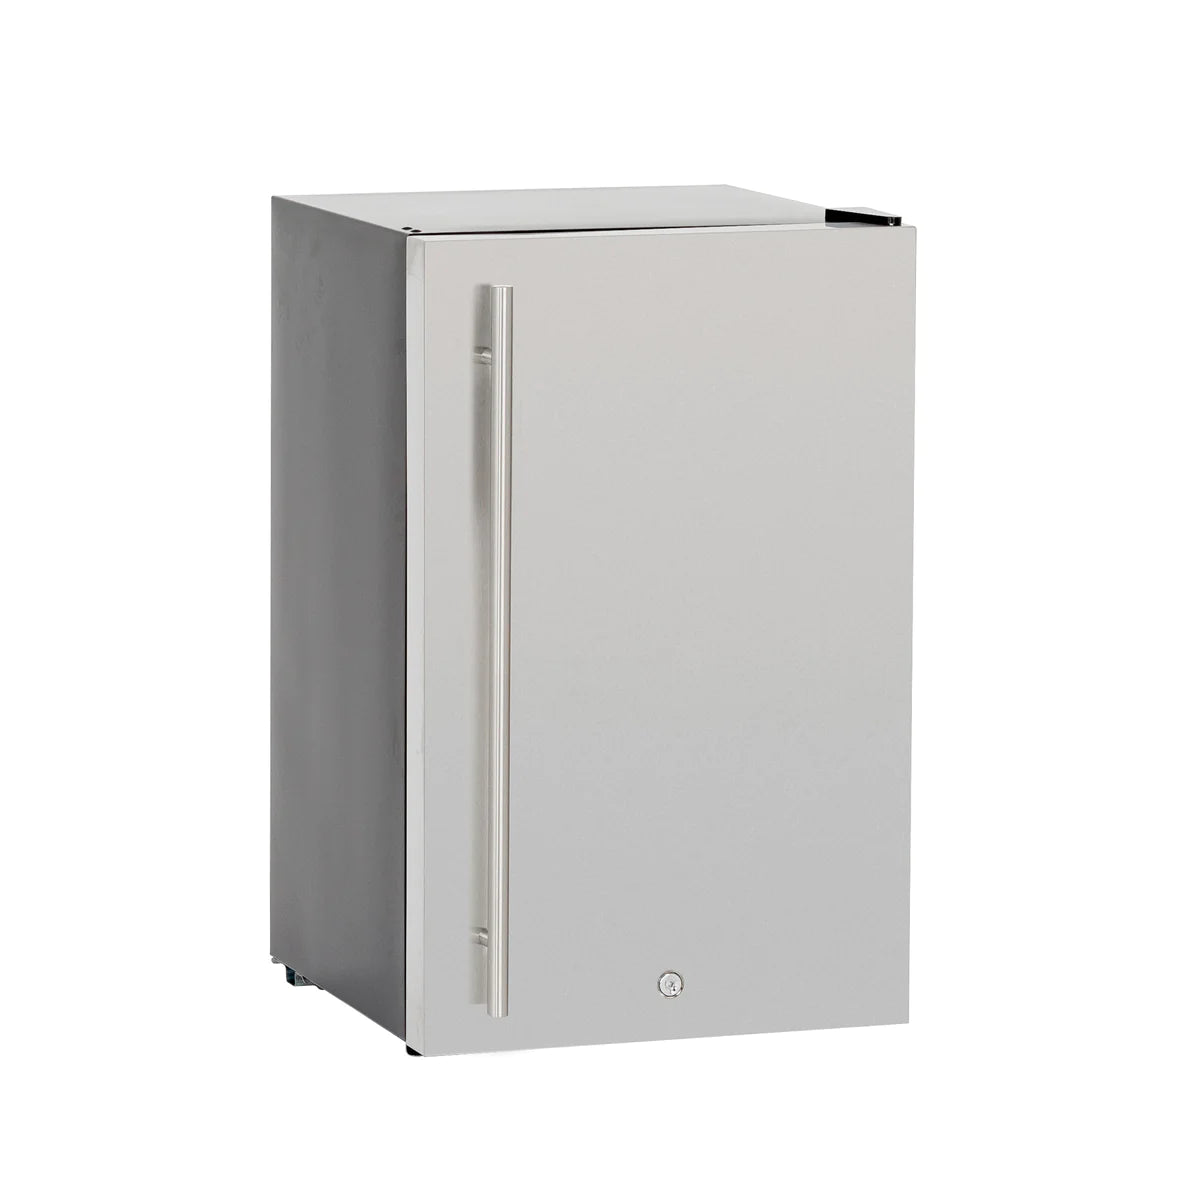 21" 4.2c Deluxe Compact Refrigerator